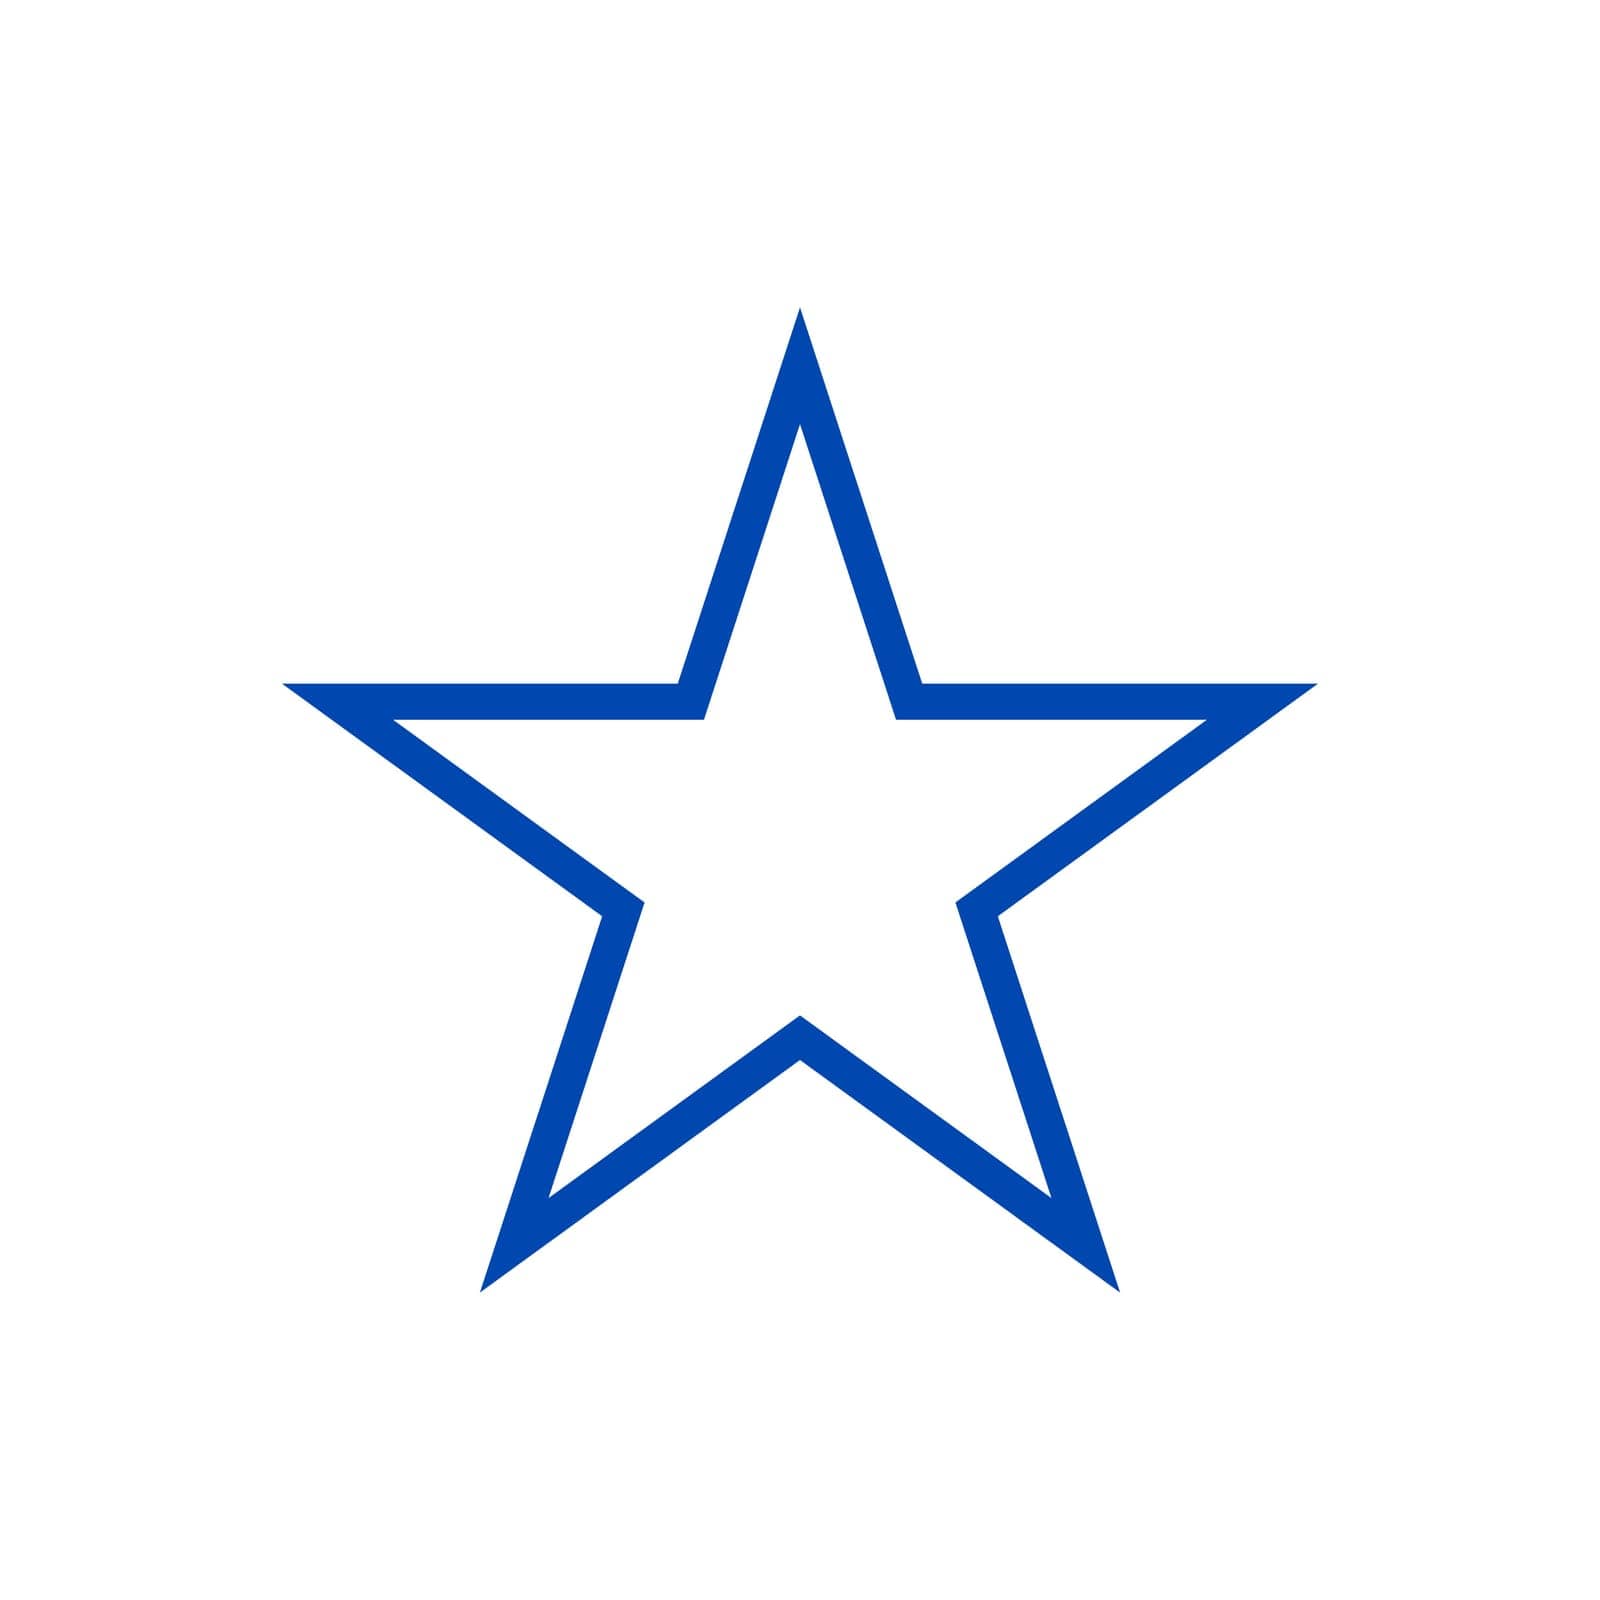 blue star astrological symbol by Dustick